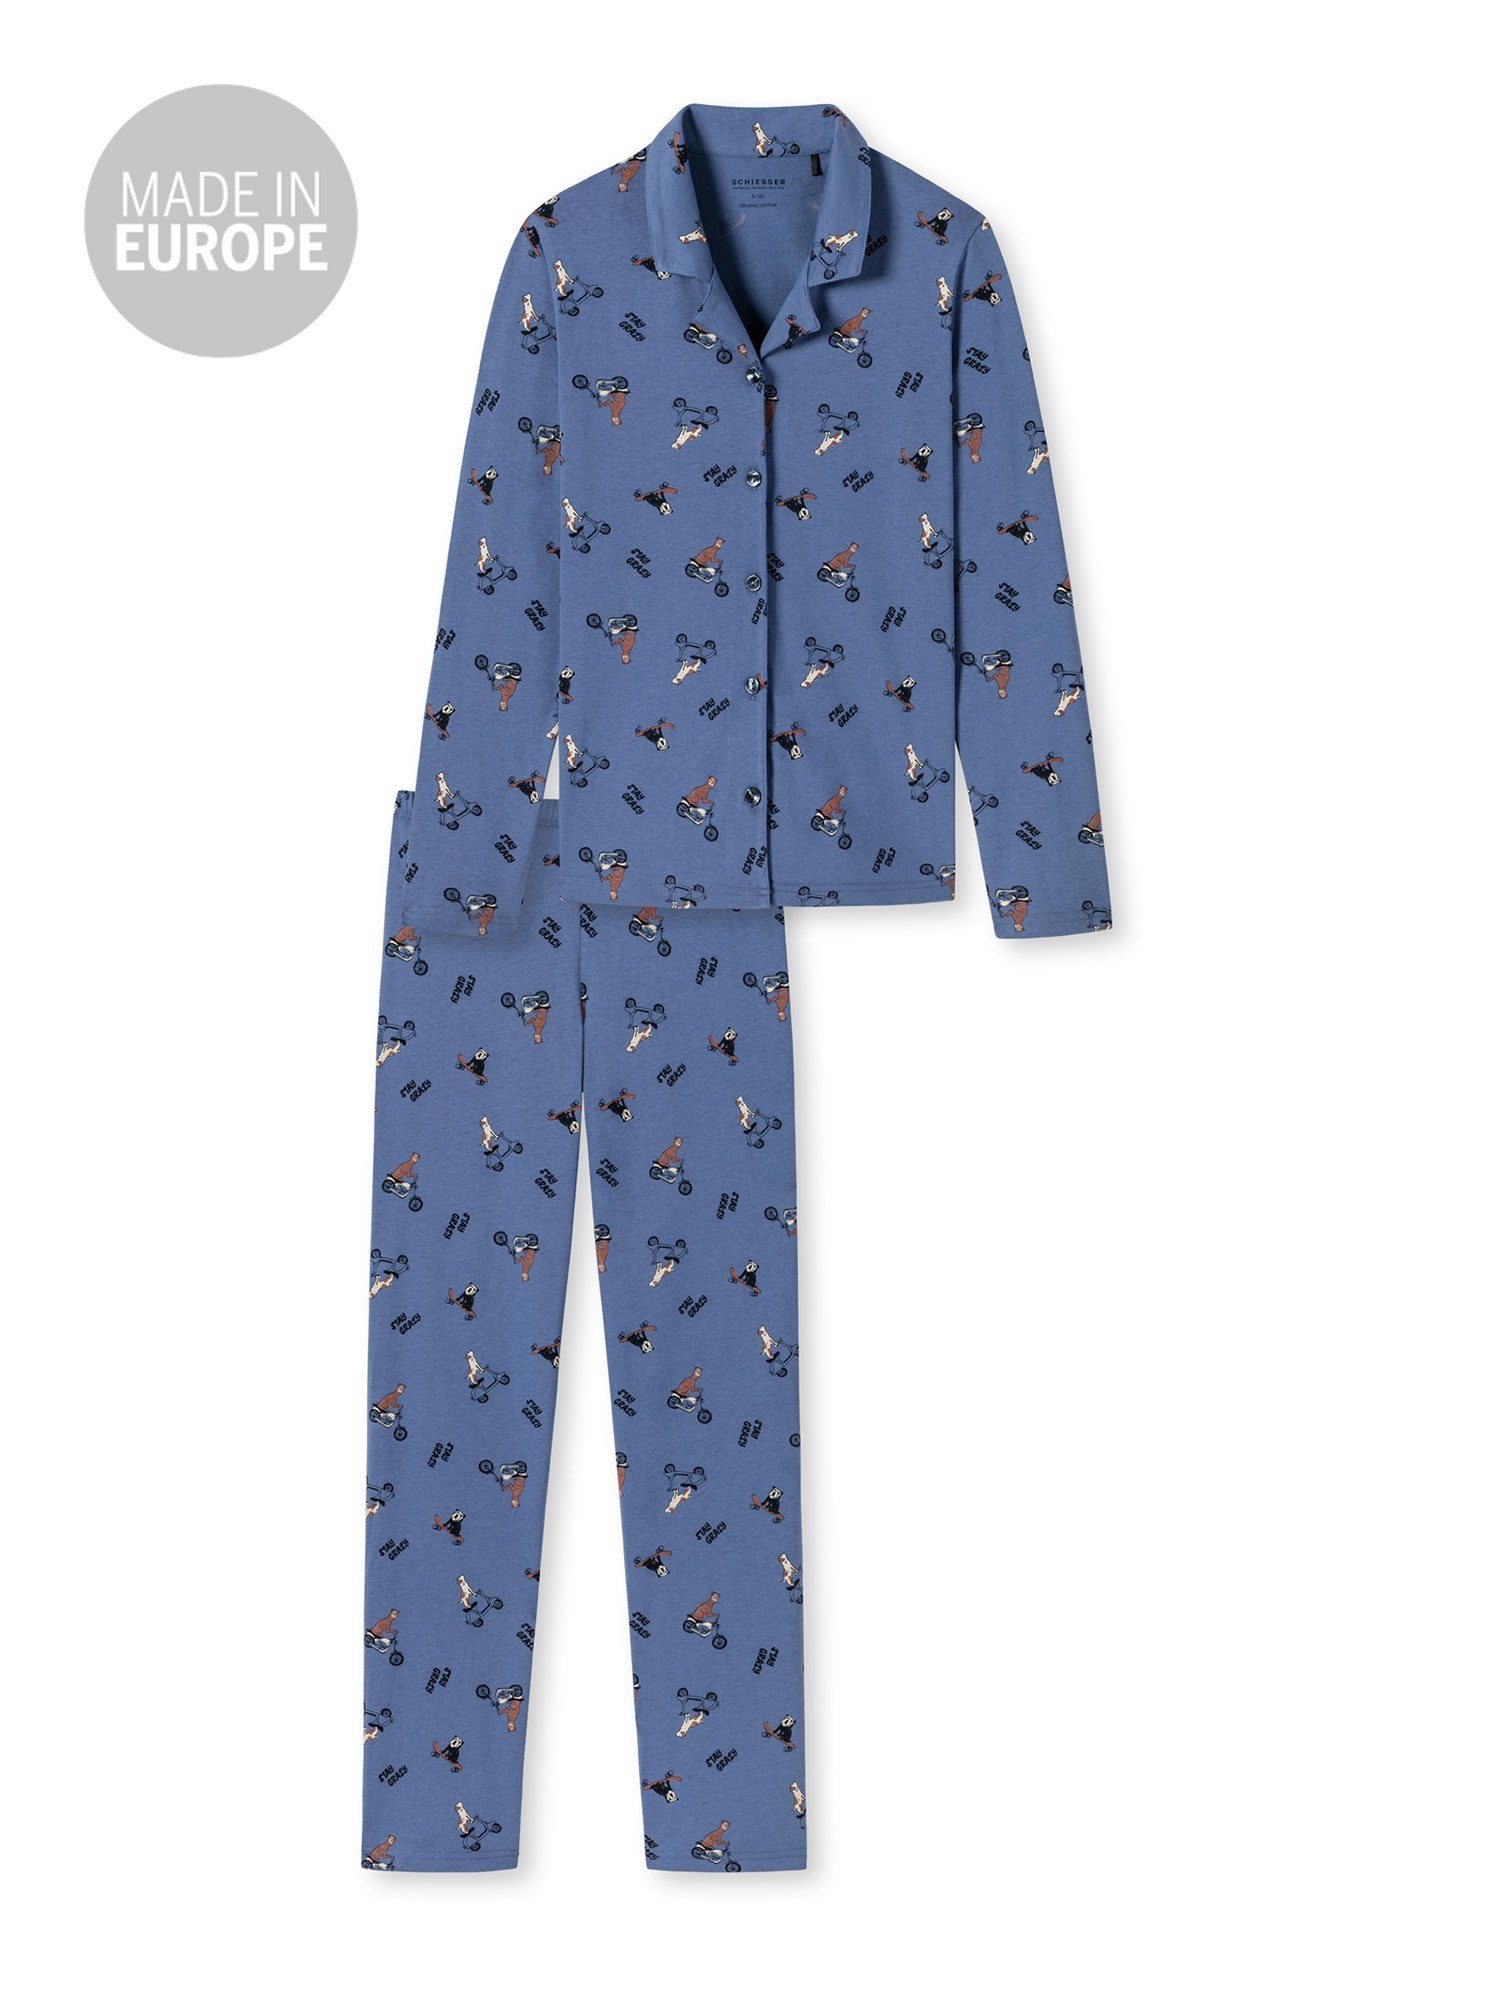 Schiesser Pyjama Animals blau